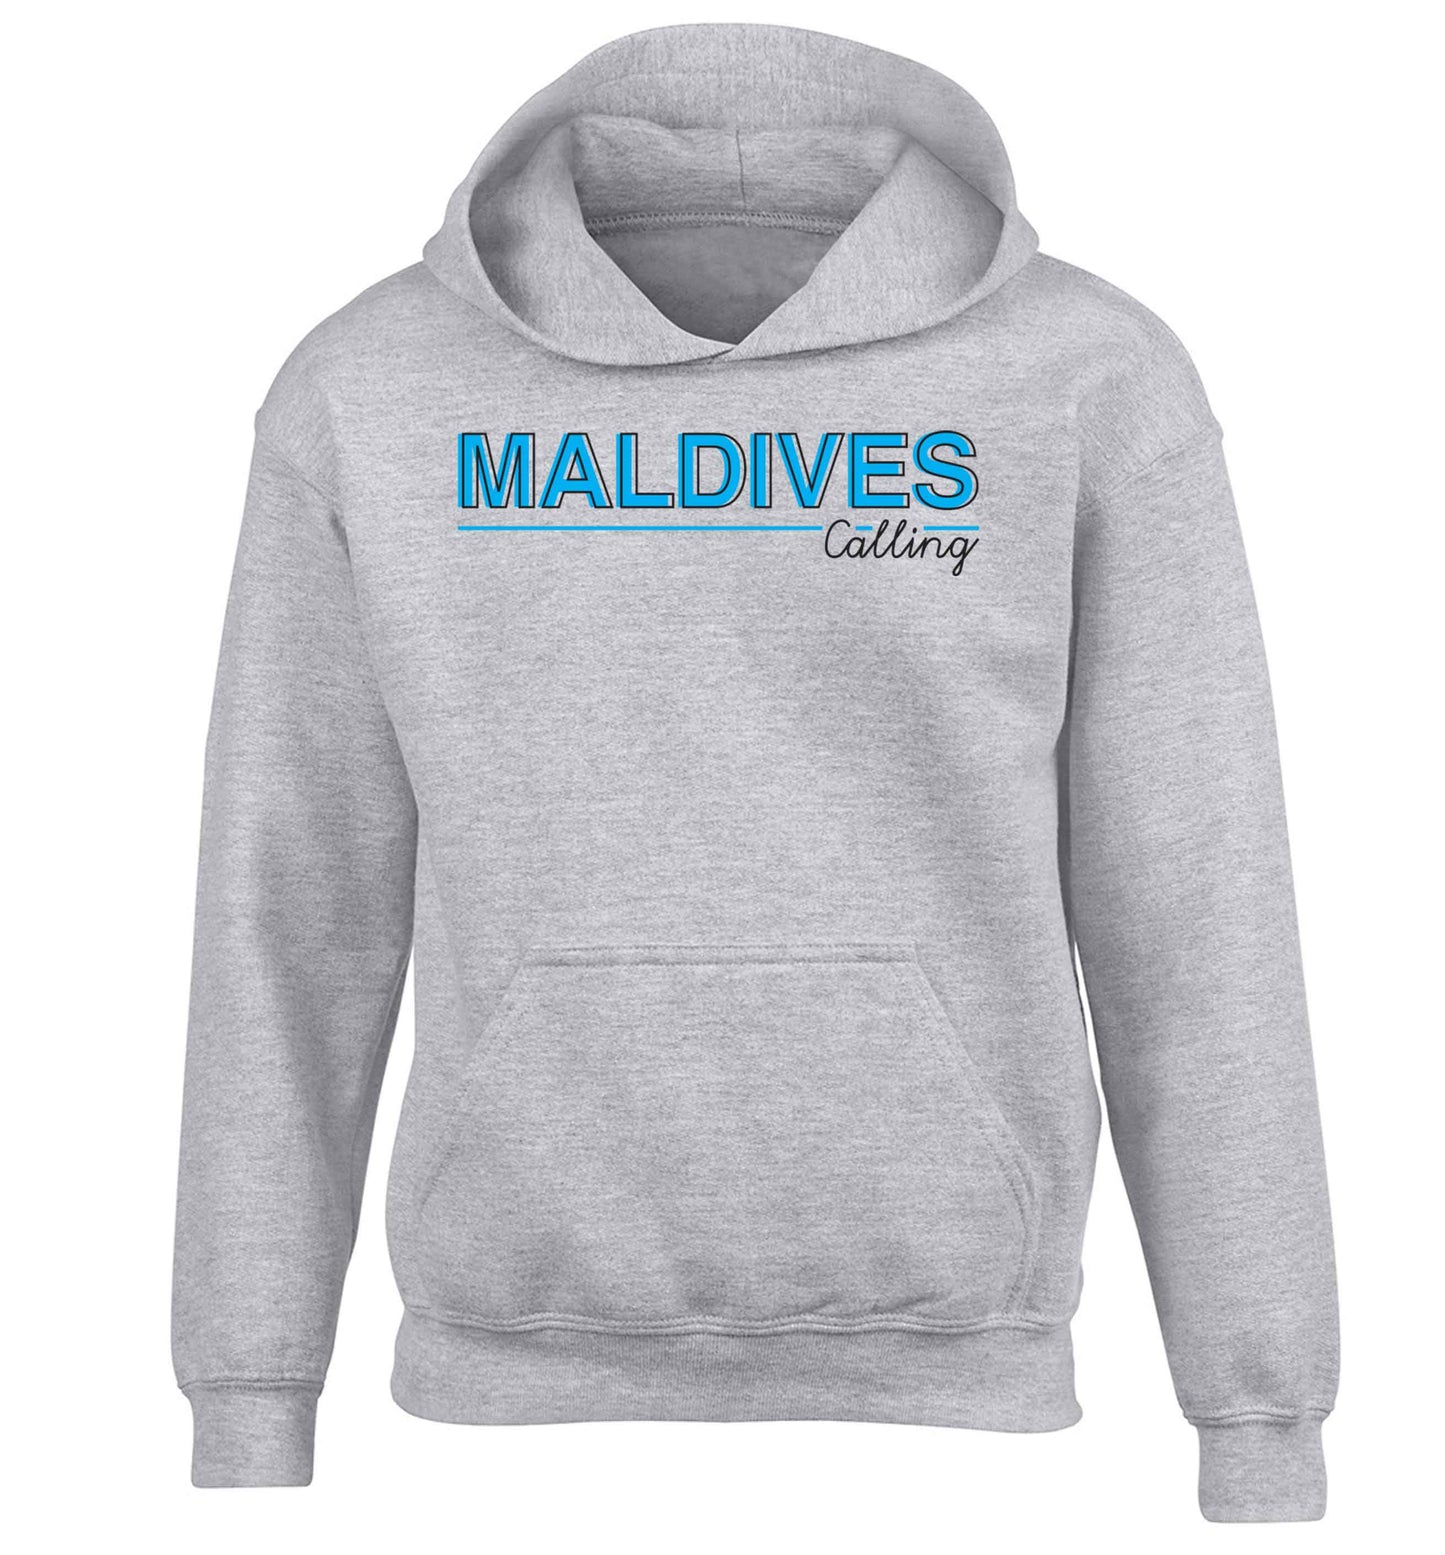 Maldives calling children's grey hoodie 12-13 Years